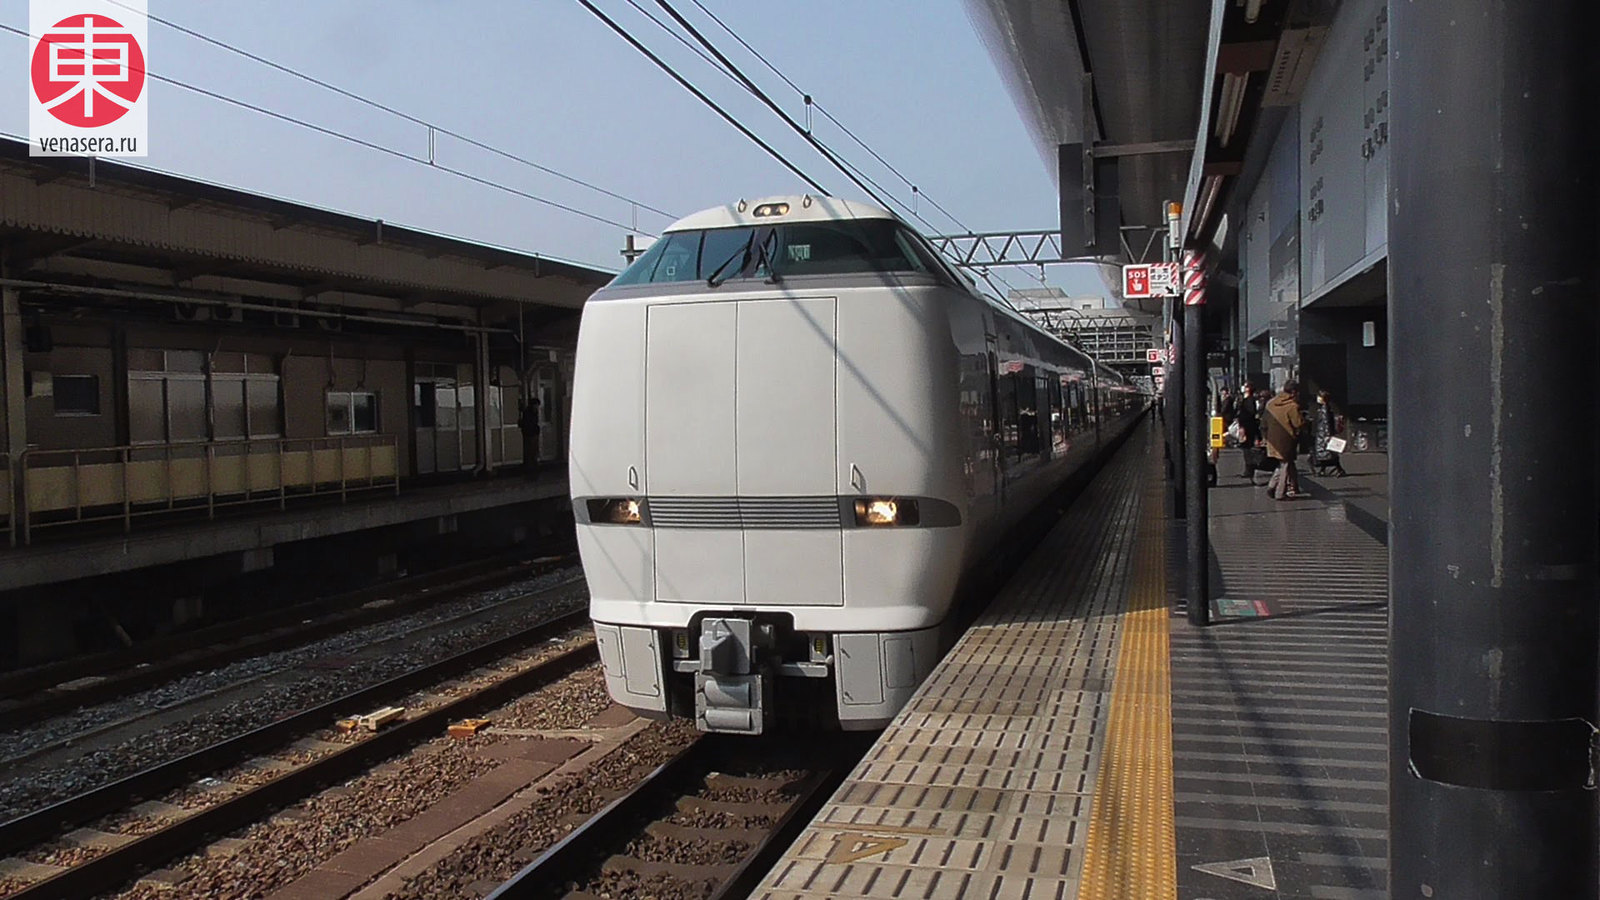 Поезд Thunderbird (サンダーバード), который курсирует по маршруту Осака - Тояма.